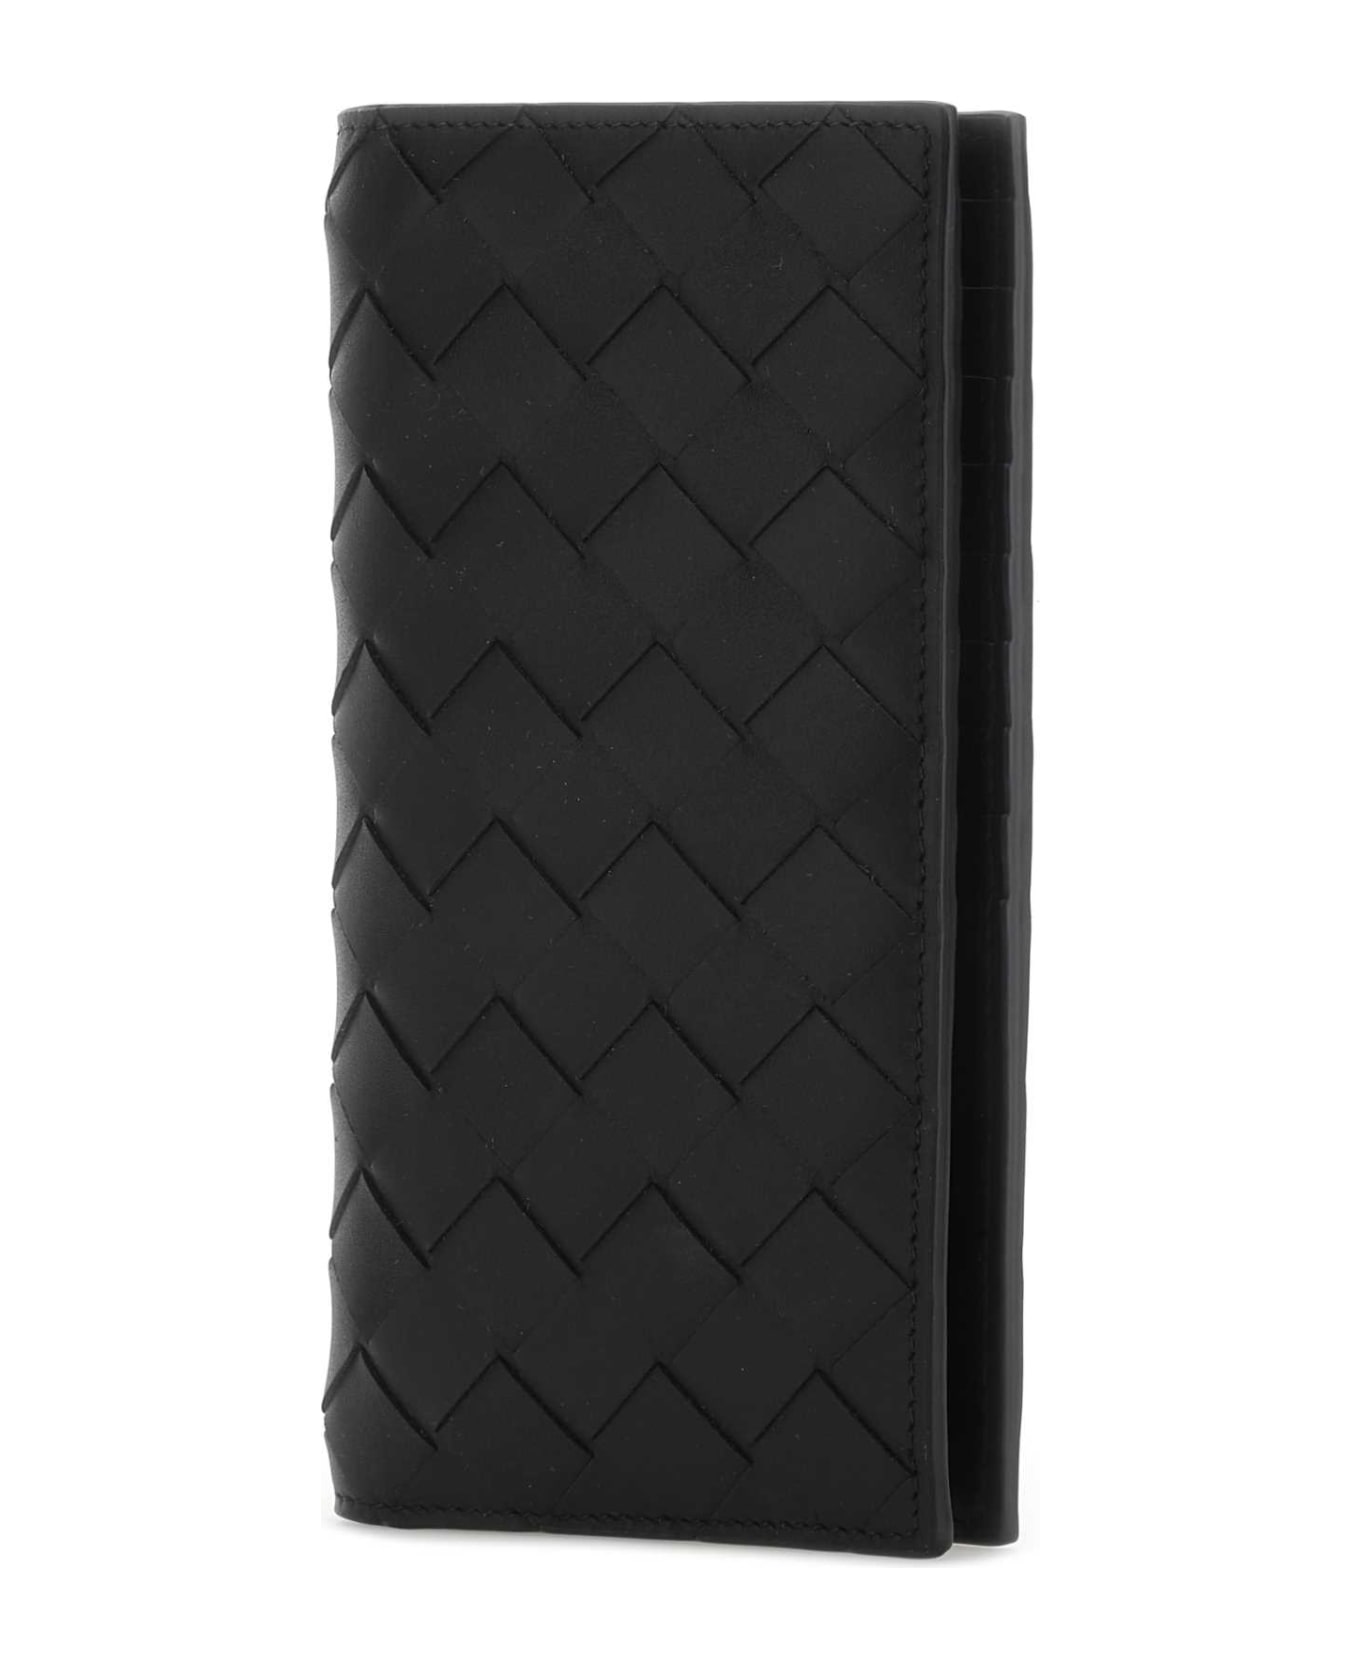 Bottega Veneta Black Leather Wallet - BLACKSILVER 財布